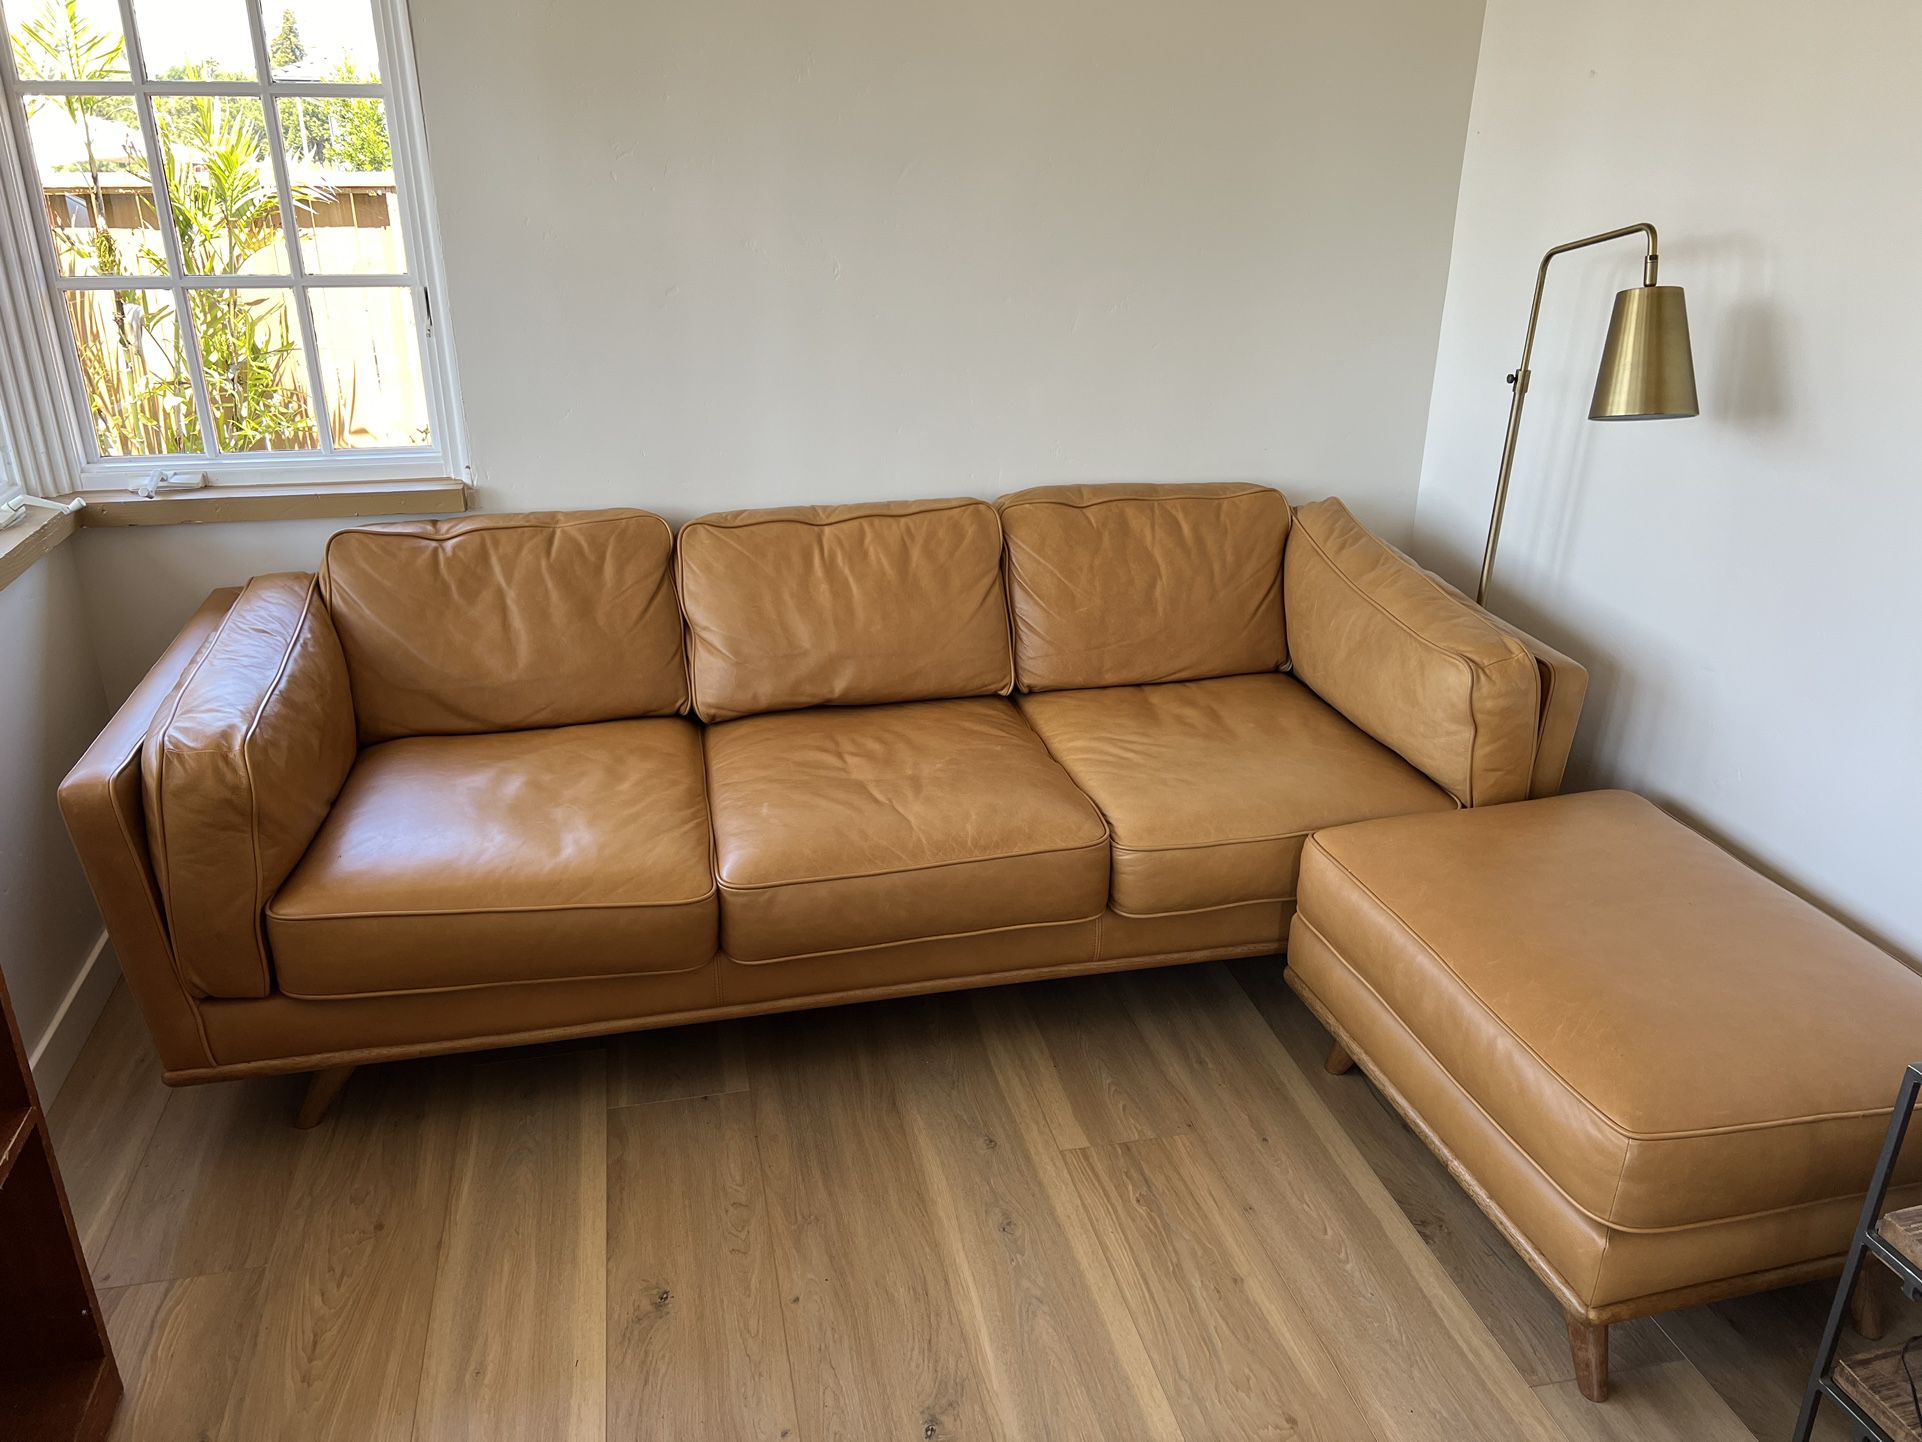 Article Timber Charme Leather Tan Sofa & Ottoman 